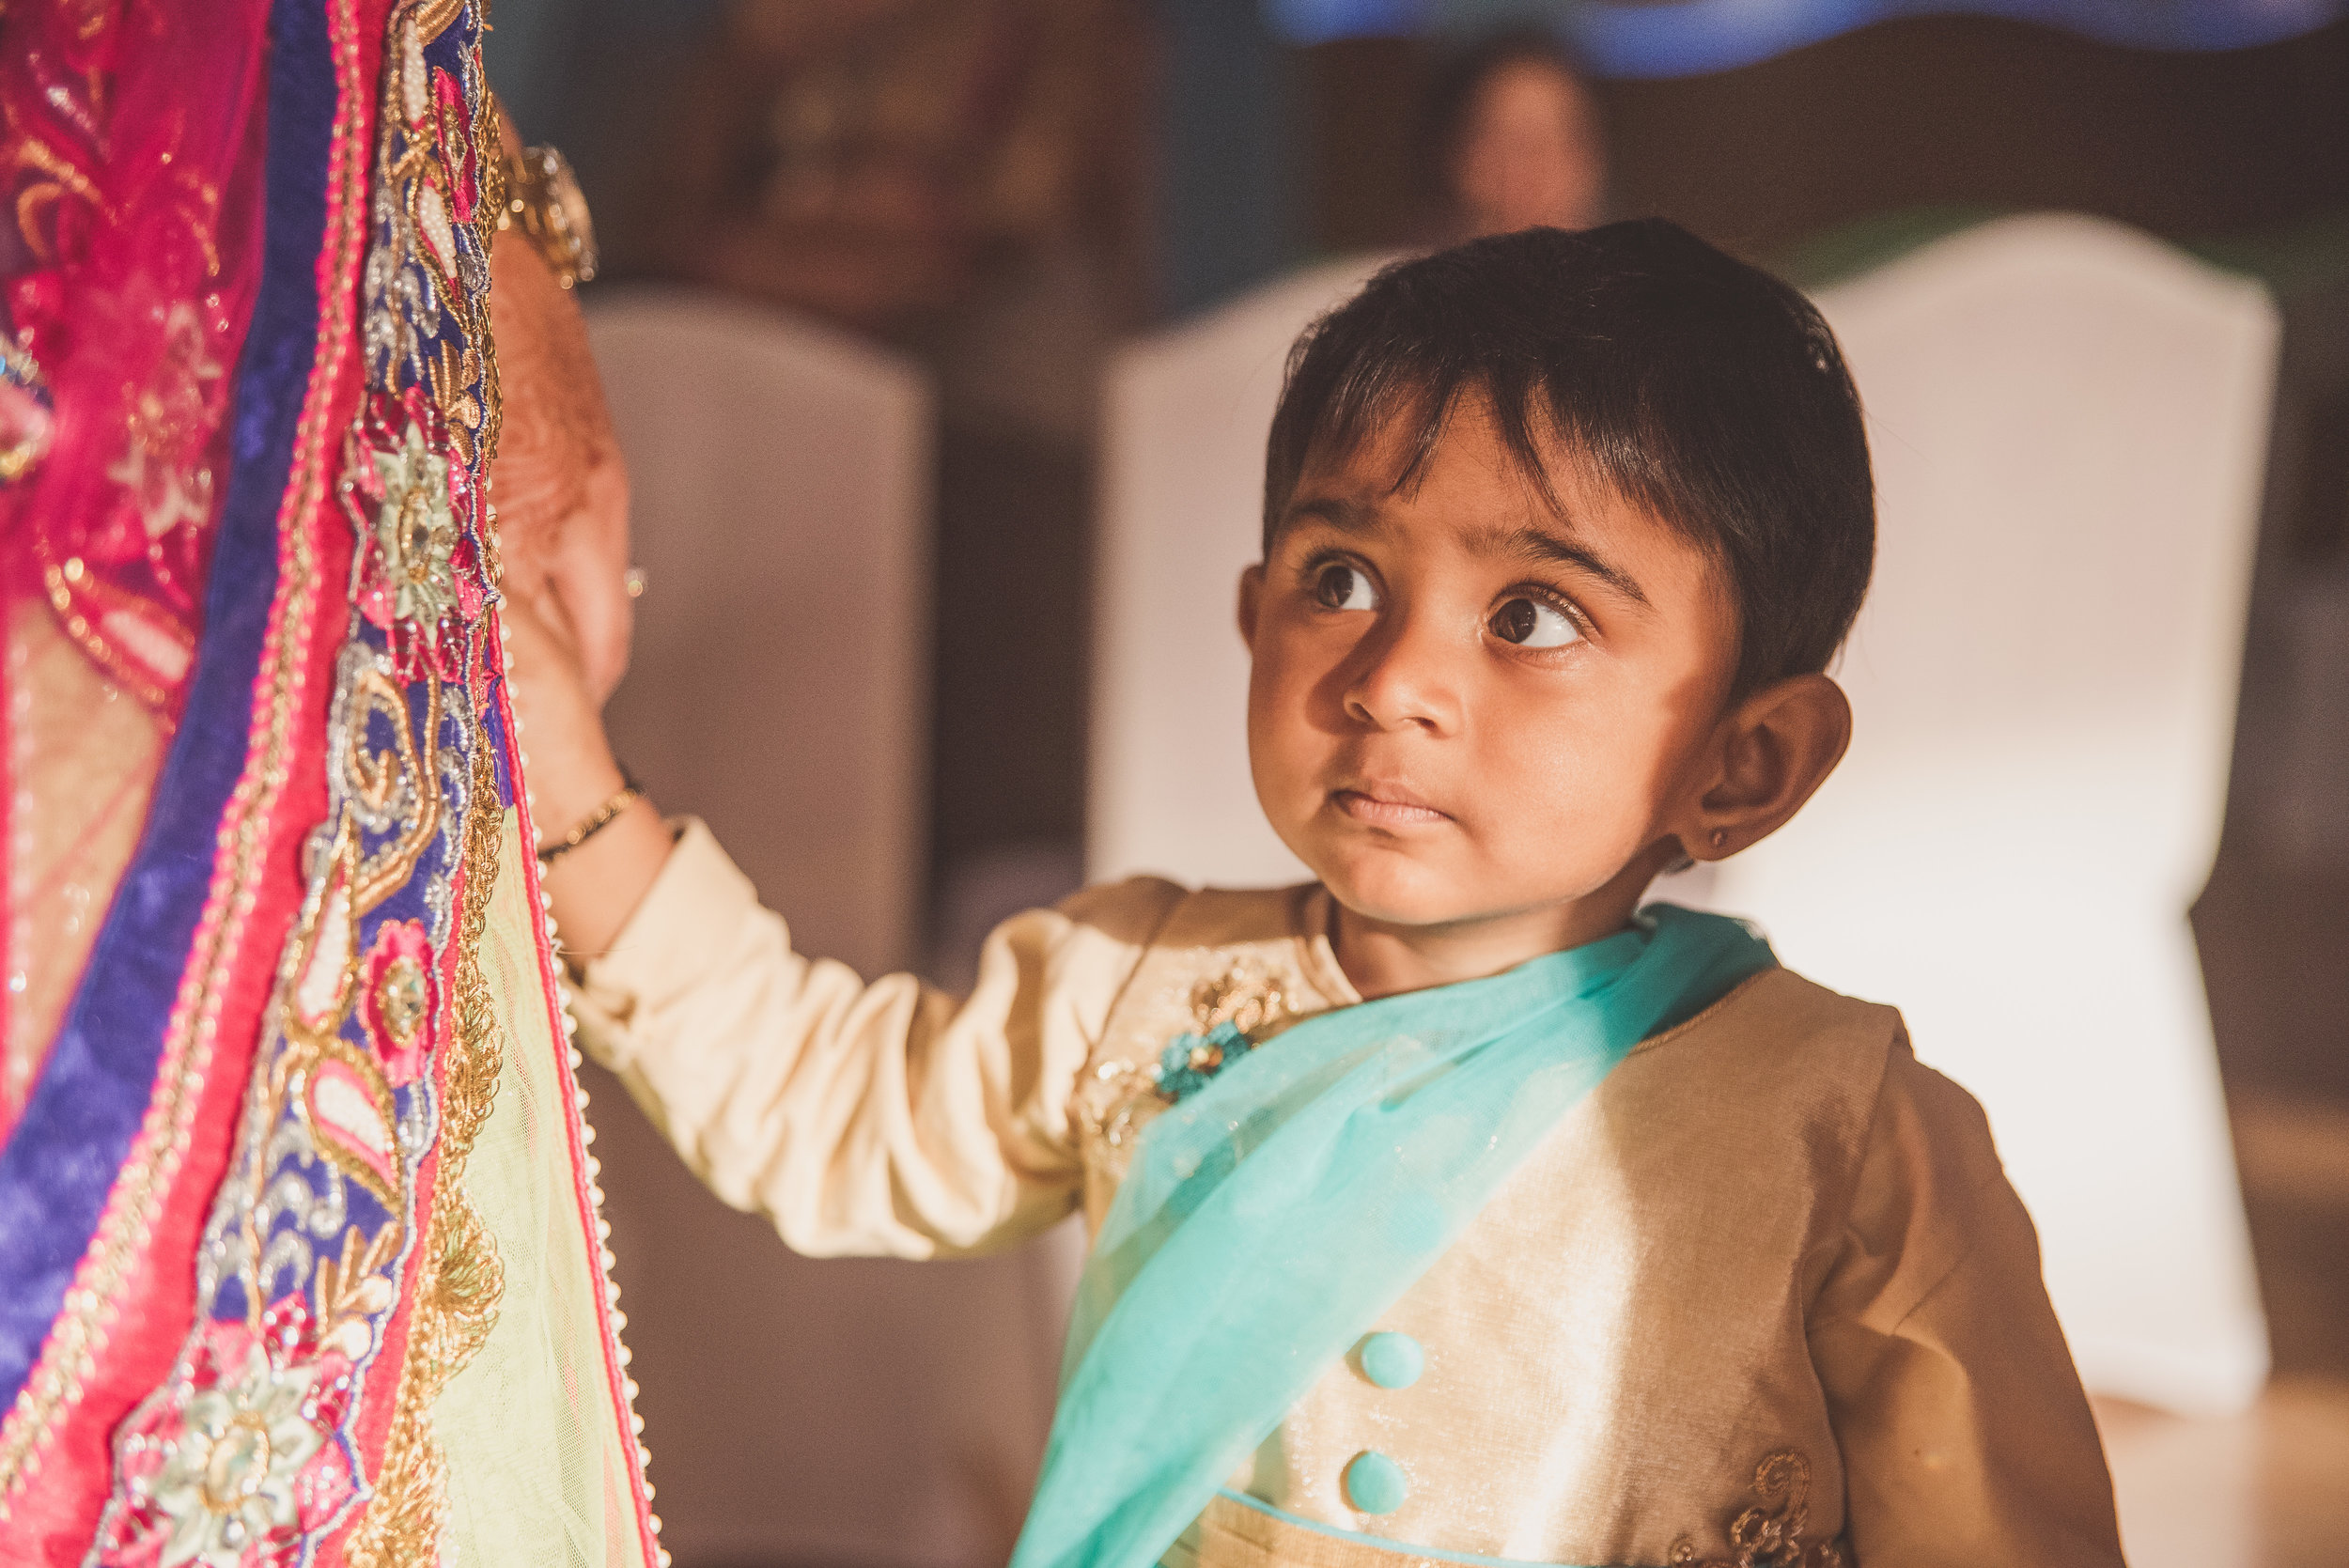 Hindu girl at wedding